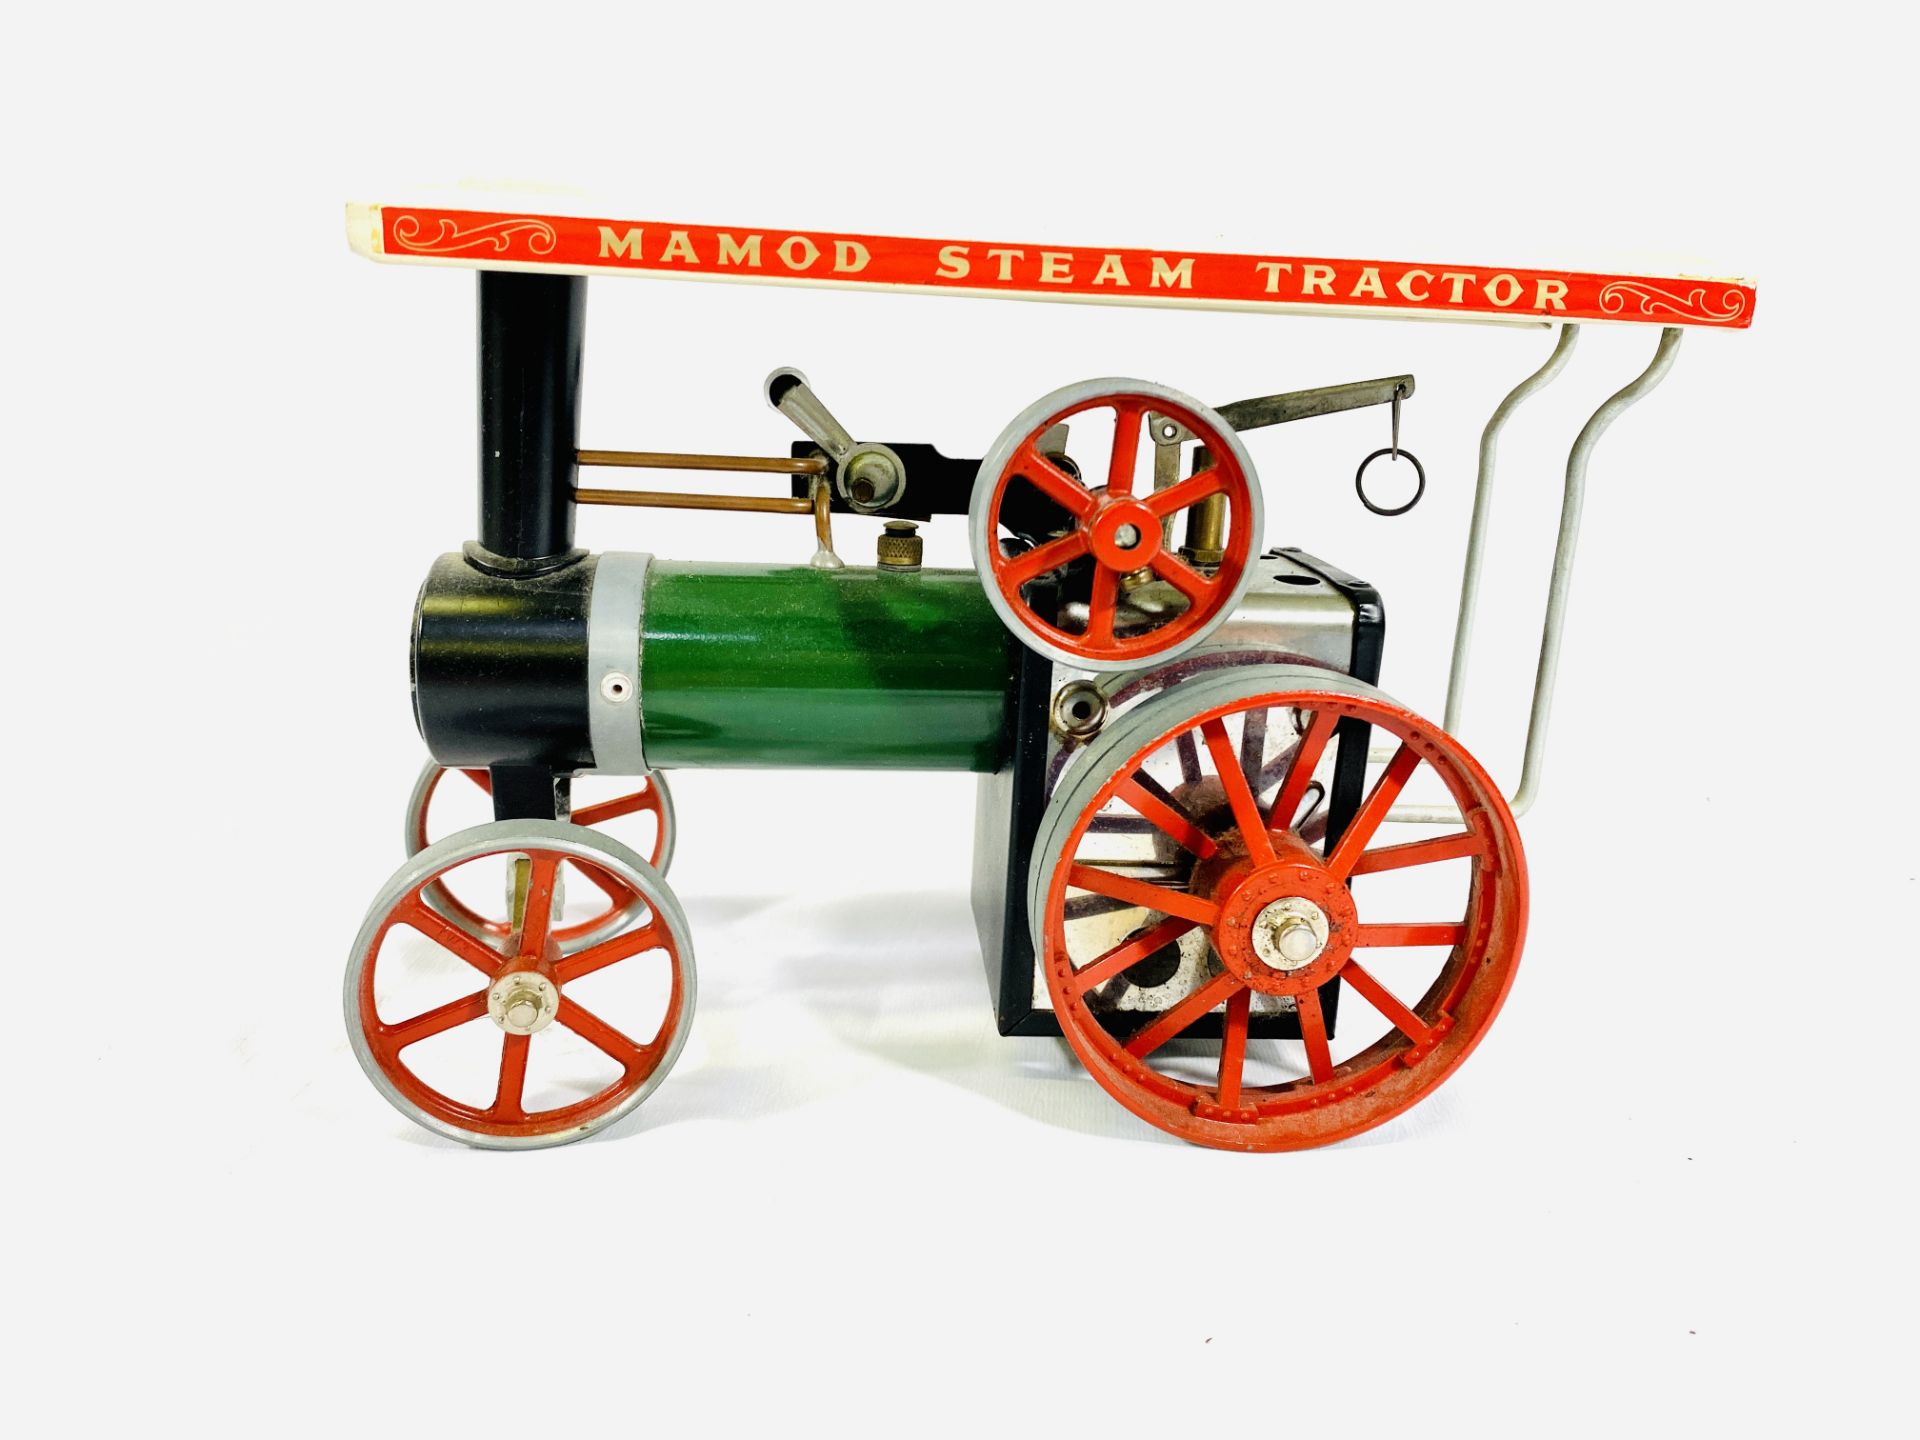 Mamod steam engine - Image 2 of 5